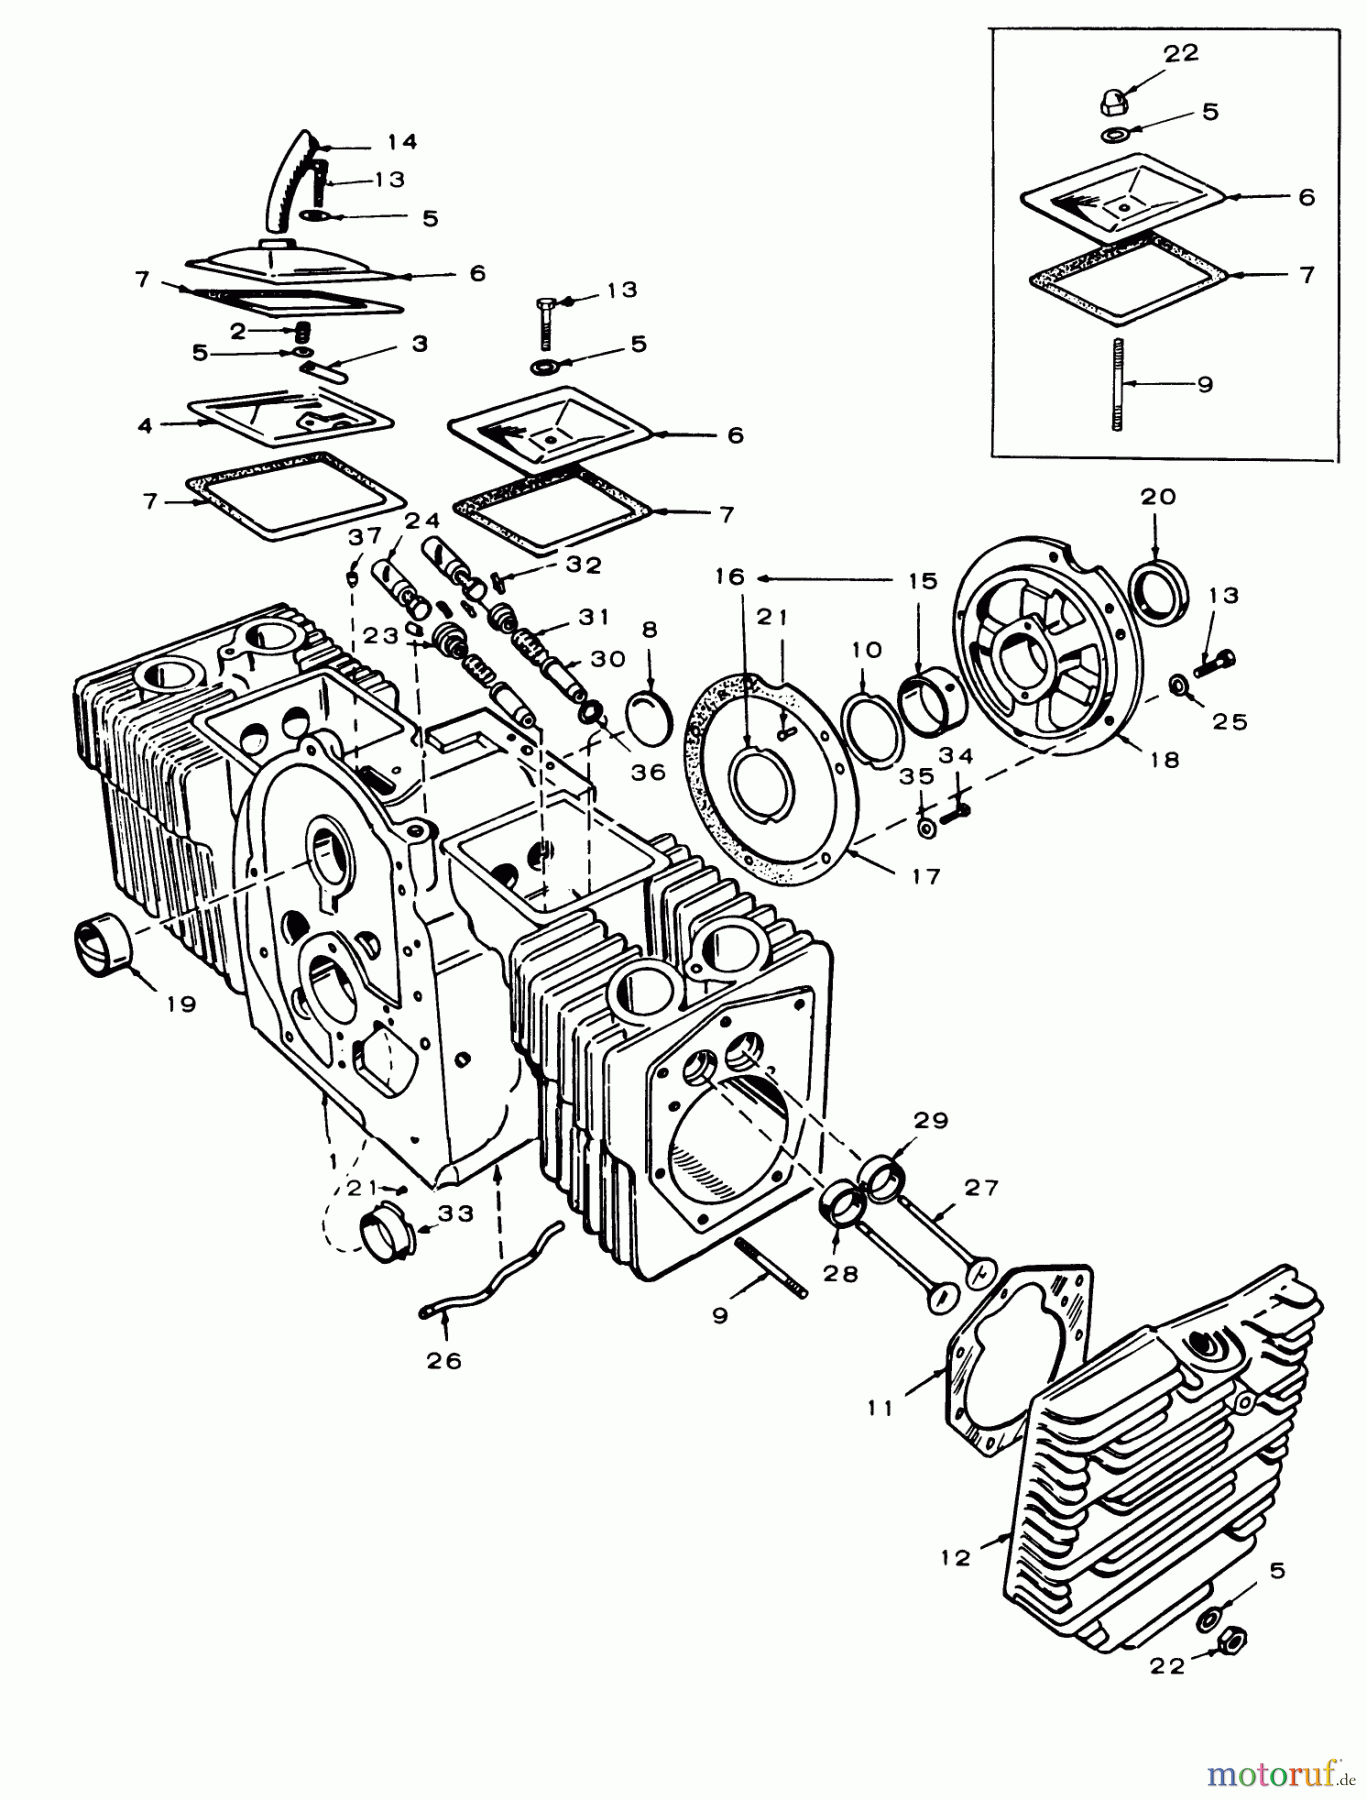  Toro Neu Mowers, Lawn & Garden Tractor Seite 1 61-16OS01 (D-160) - Toro D-160 Automatic Tractor, 1976 CYLINDER BLOCK GROUP-16 HP ONAN ENGINE